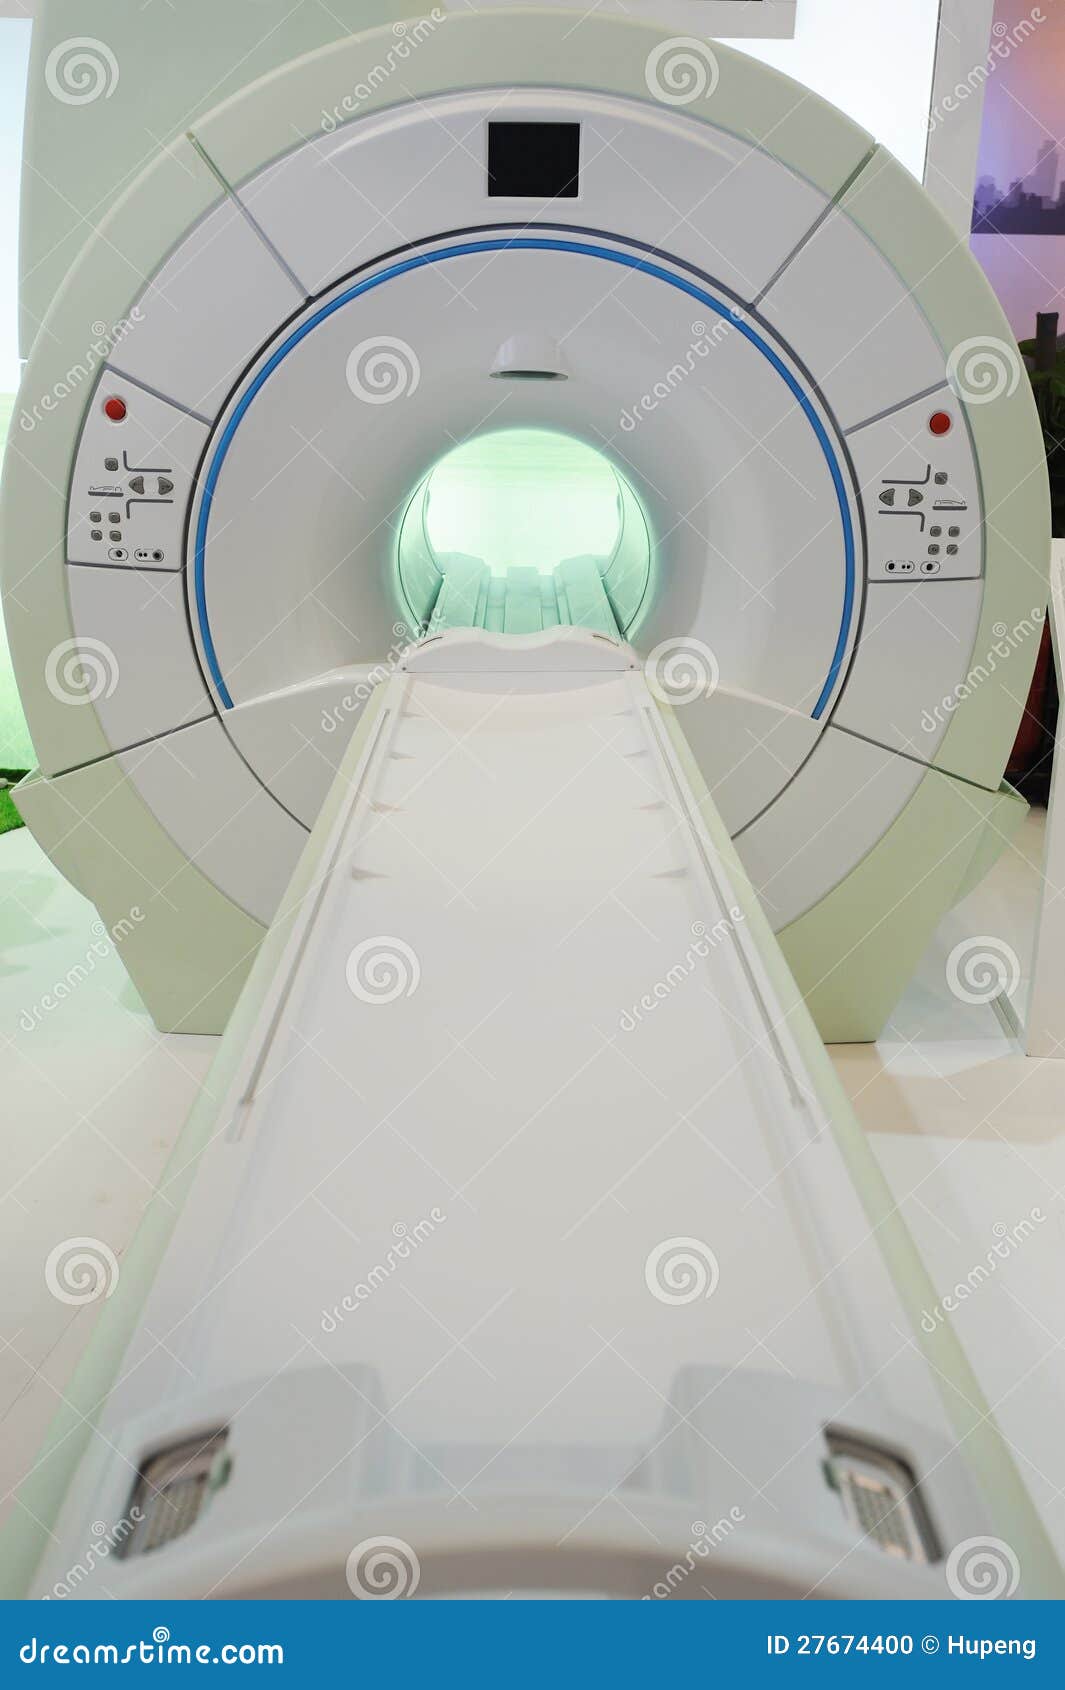 magnetic resonance imaging